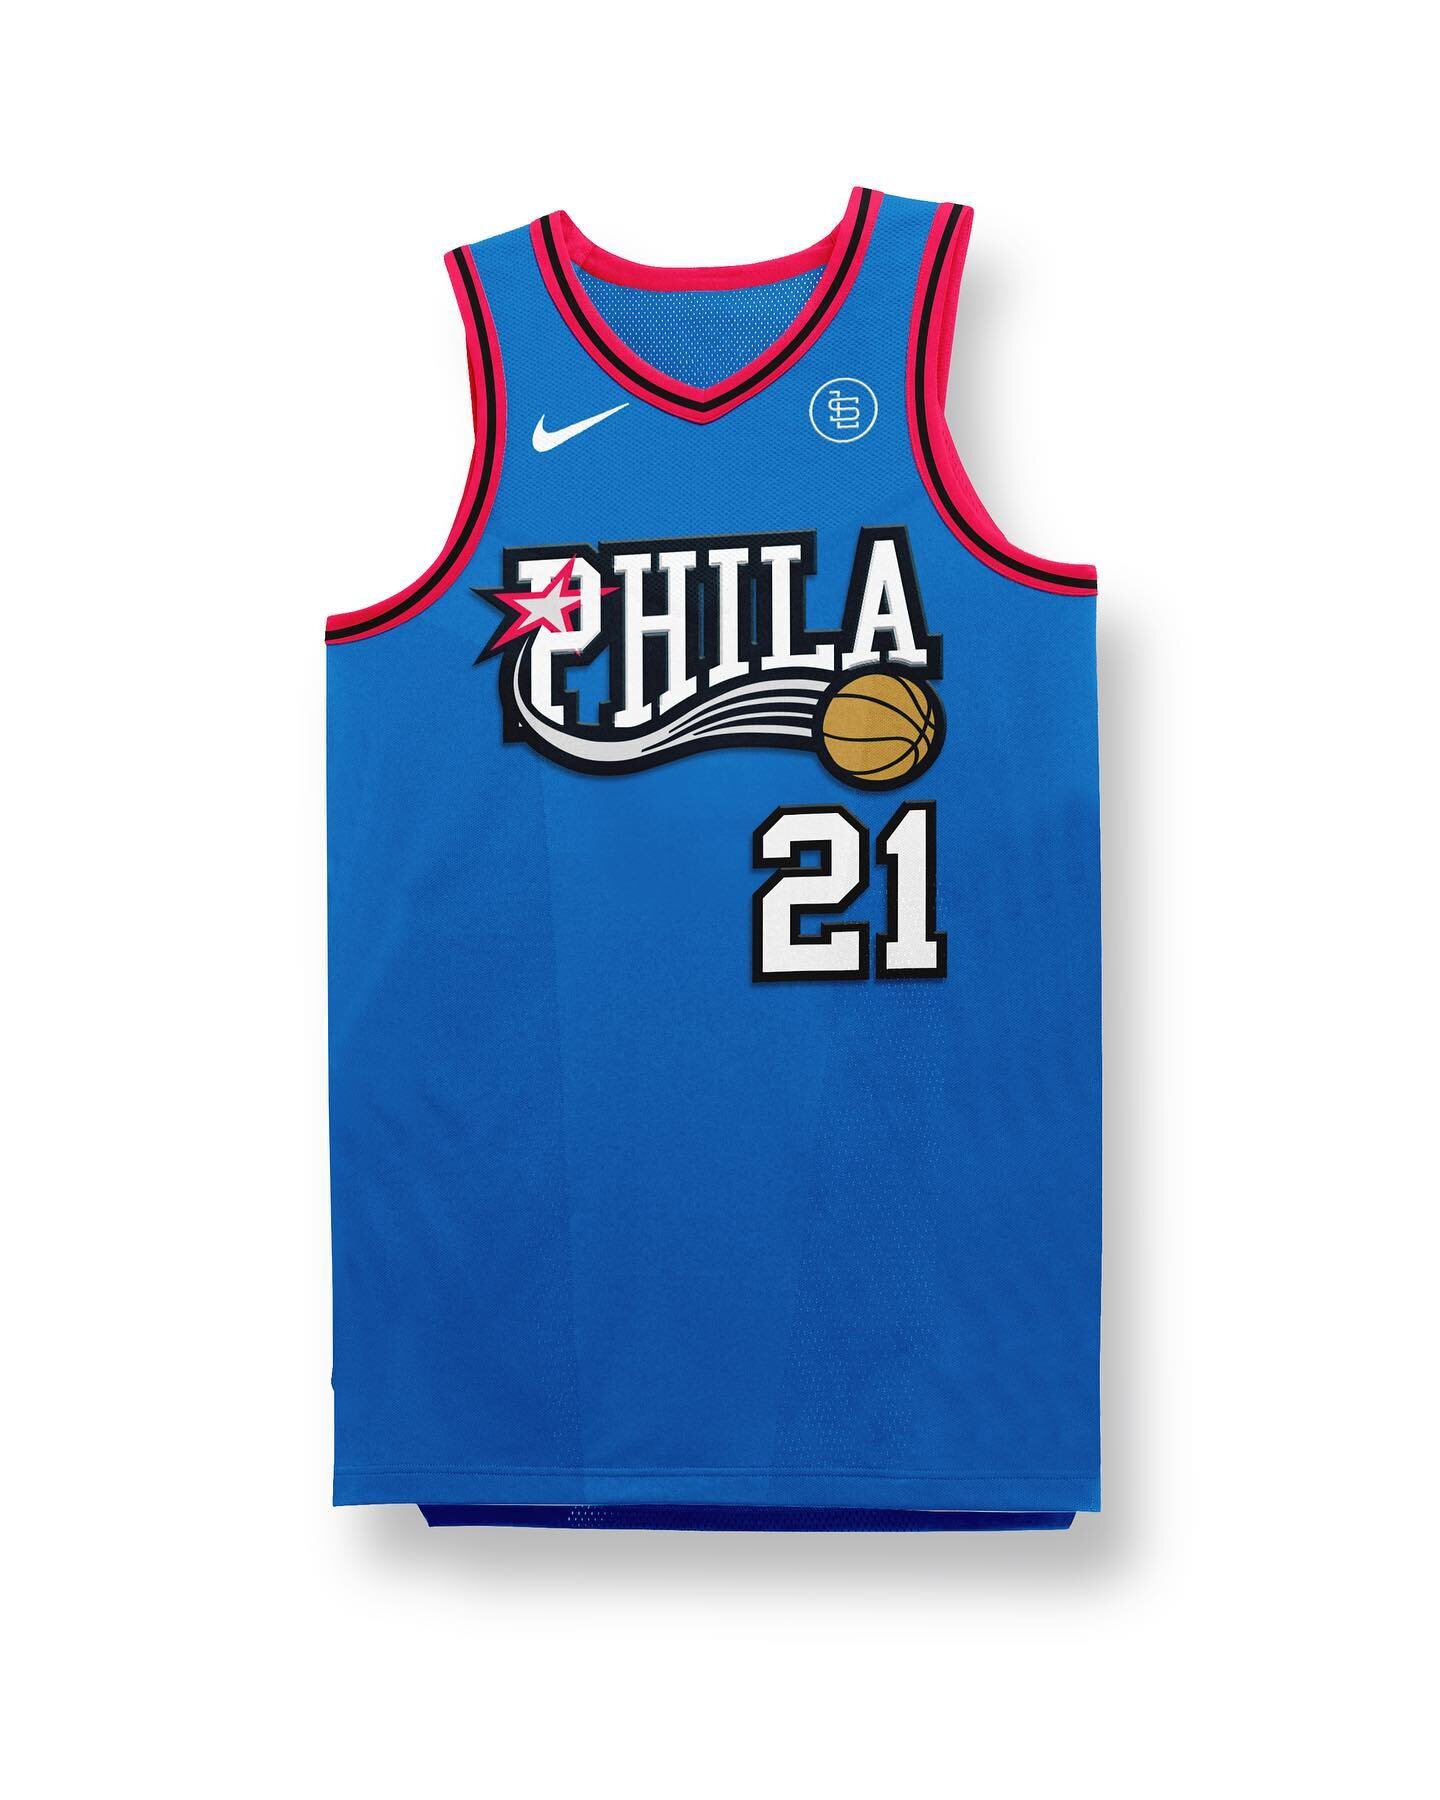 Sixers jersey concept 🔔
.
.
.
#phila #philadelphia #sixers #76ers #joelembiid #bensimmons #alleniverson #phillyphilly #trusttheprocess #nba #ers #sixersfans #basketball